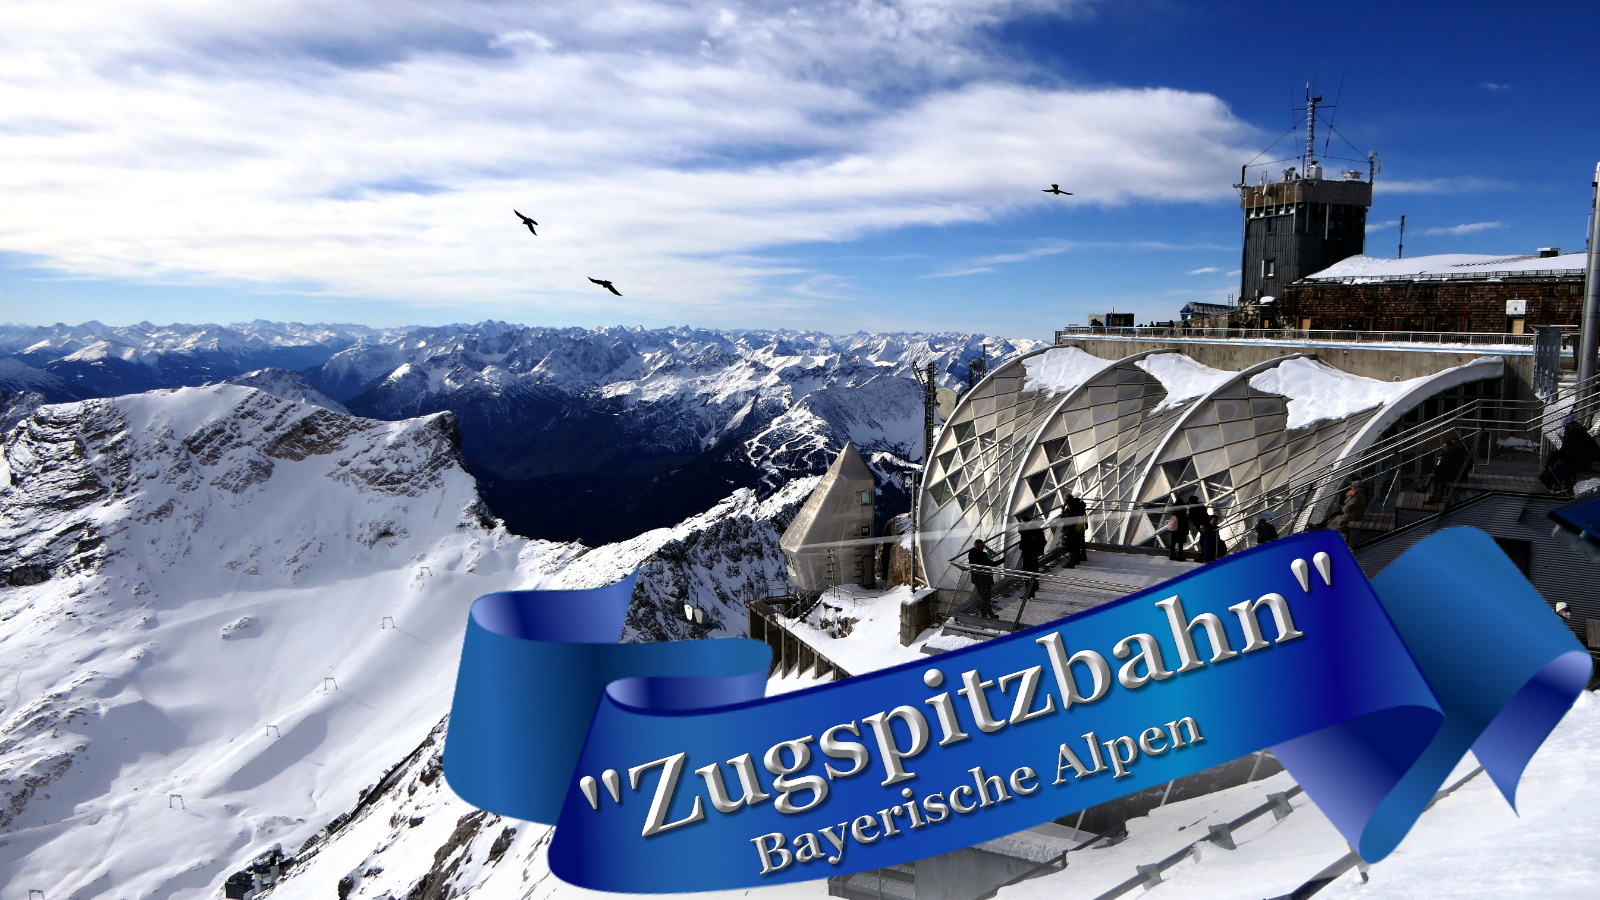 4K-"Bayerische-Alpen" Zugspitzbahn Seilbahn (2962m)  /via Eibsee  Top of Germany Vlog/.